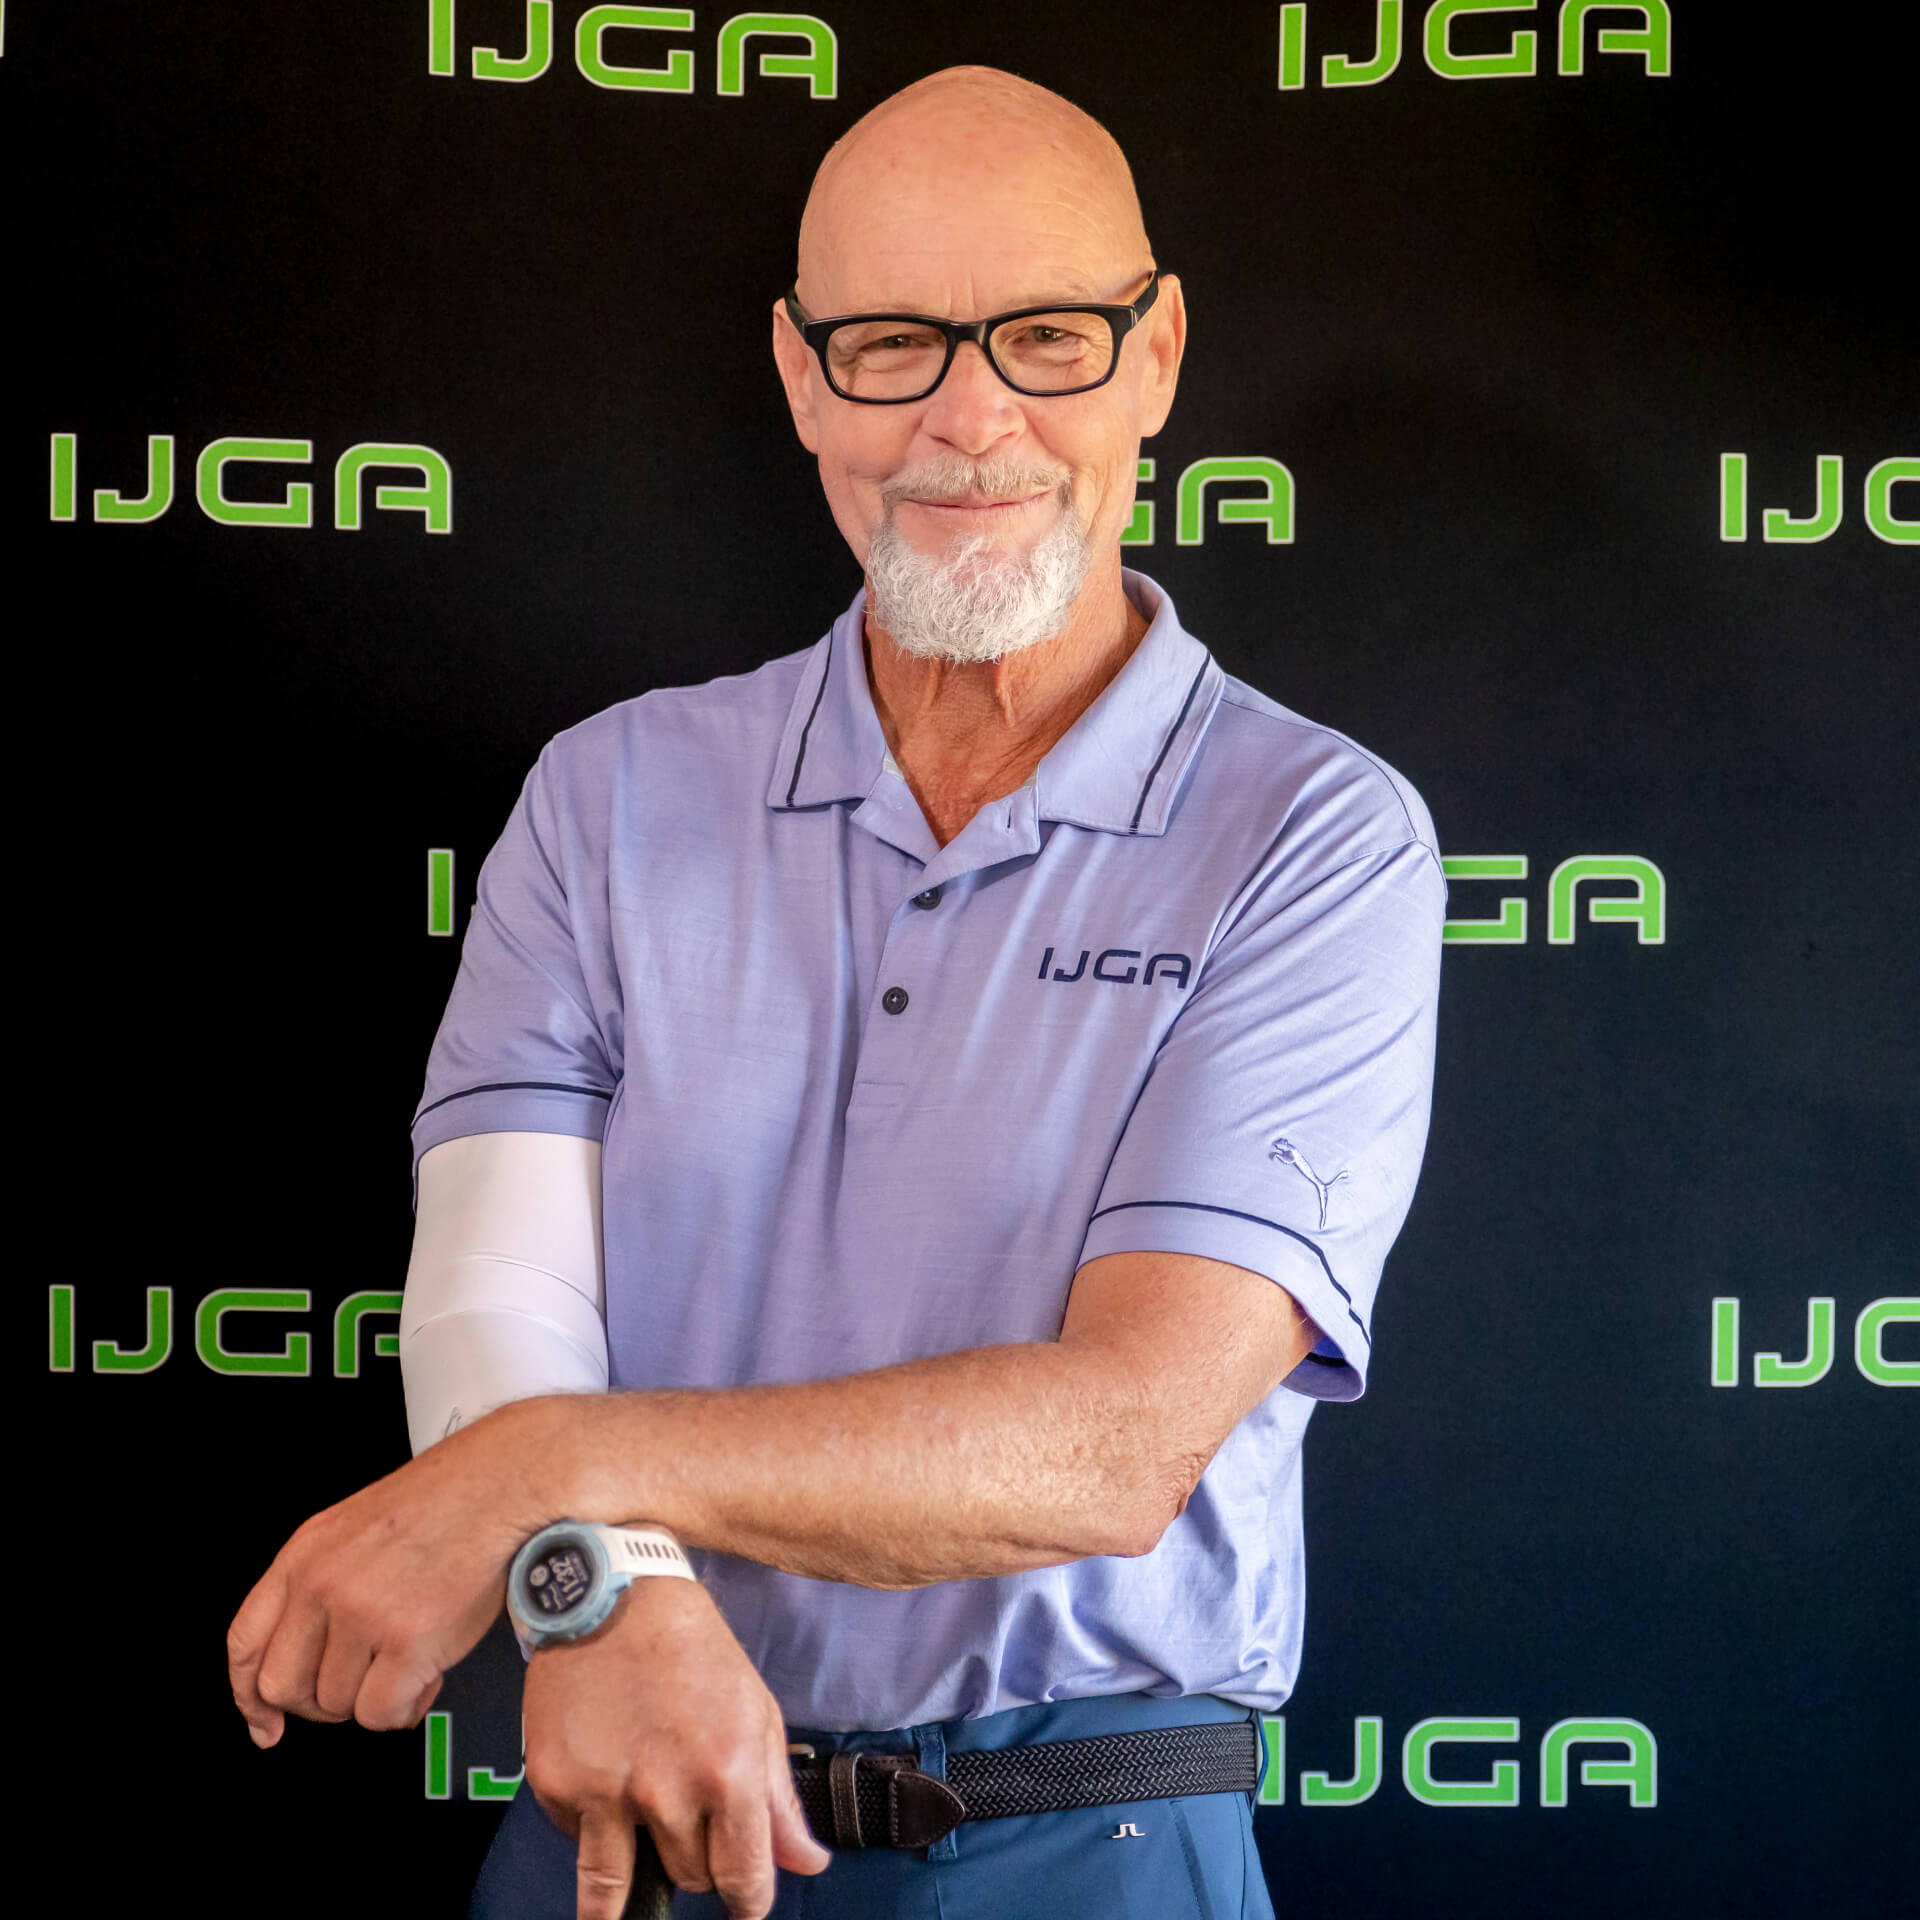 IJGA coach Gary Wise, smiles against a black IJGA logo background